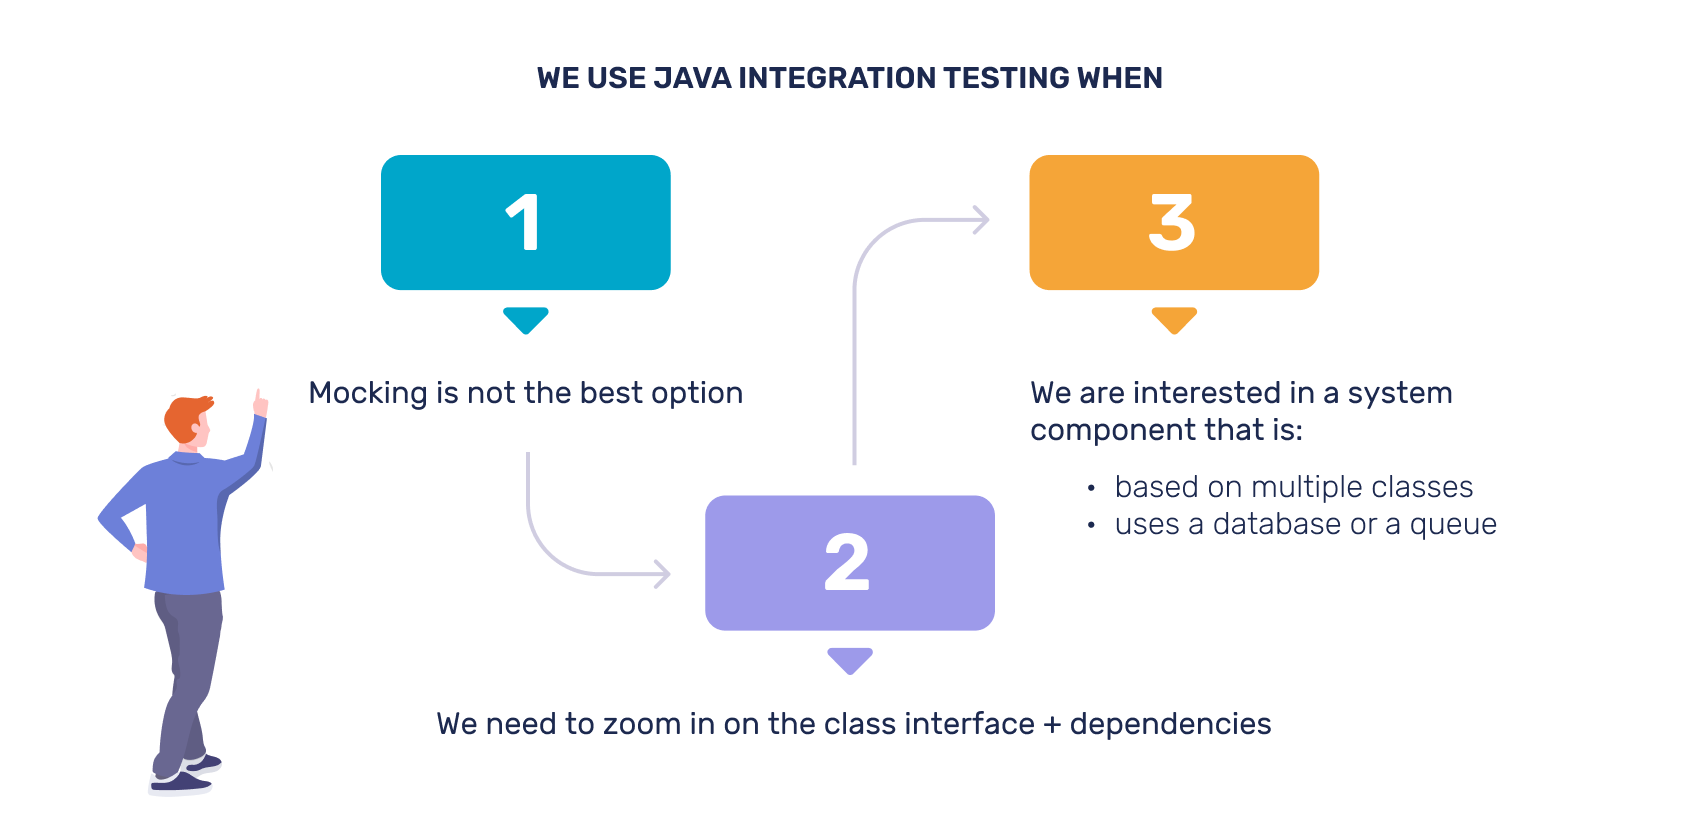 Java integration testing